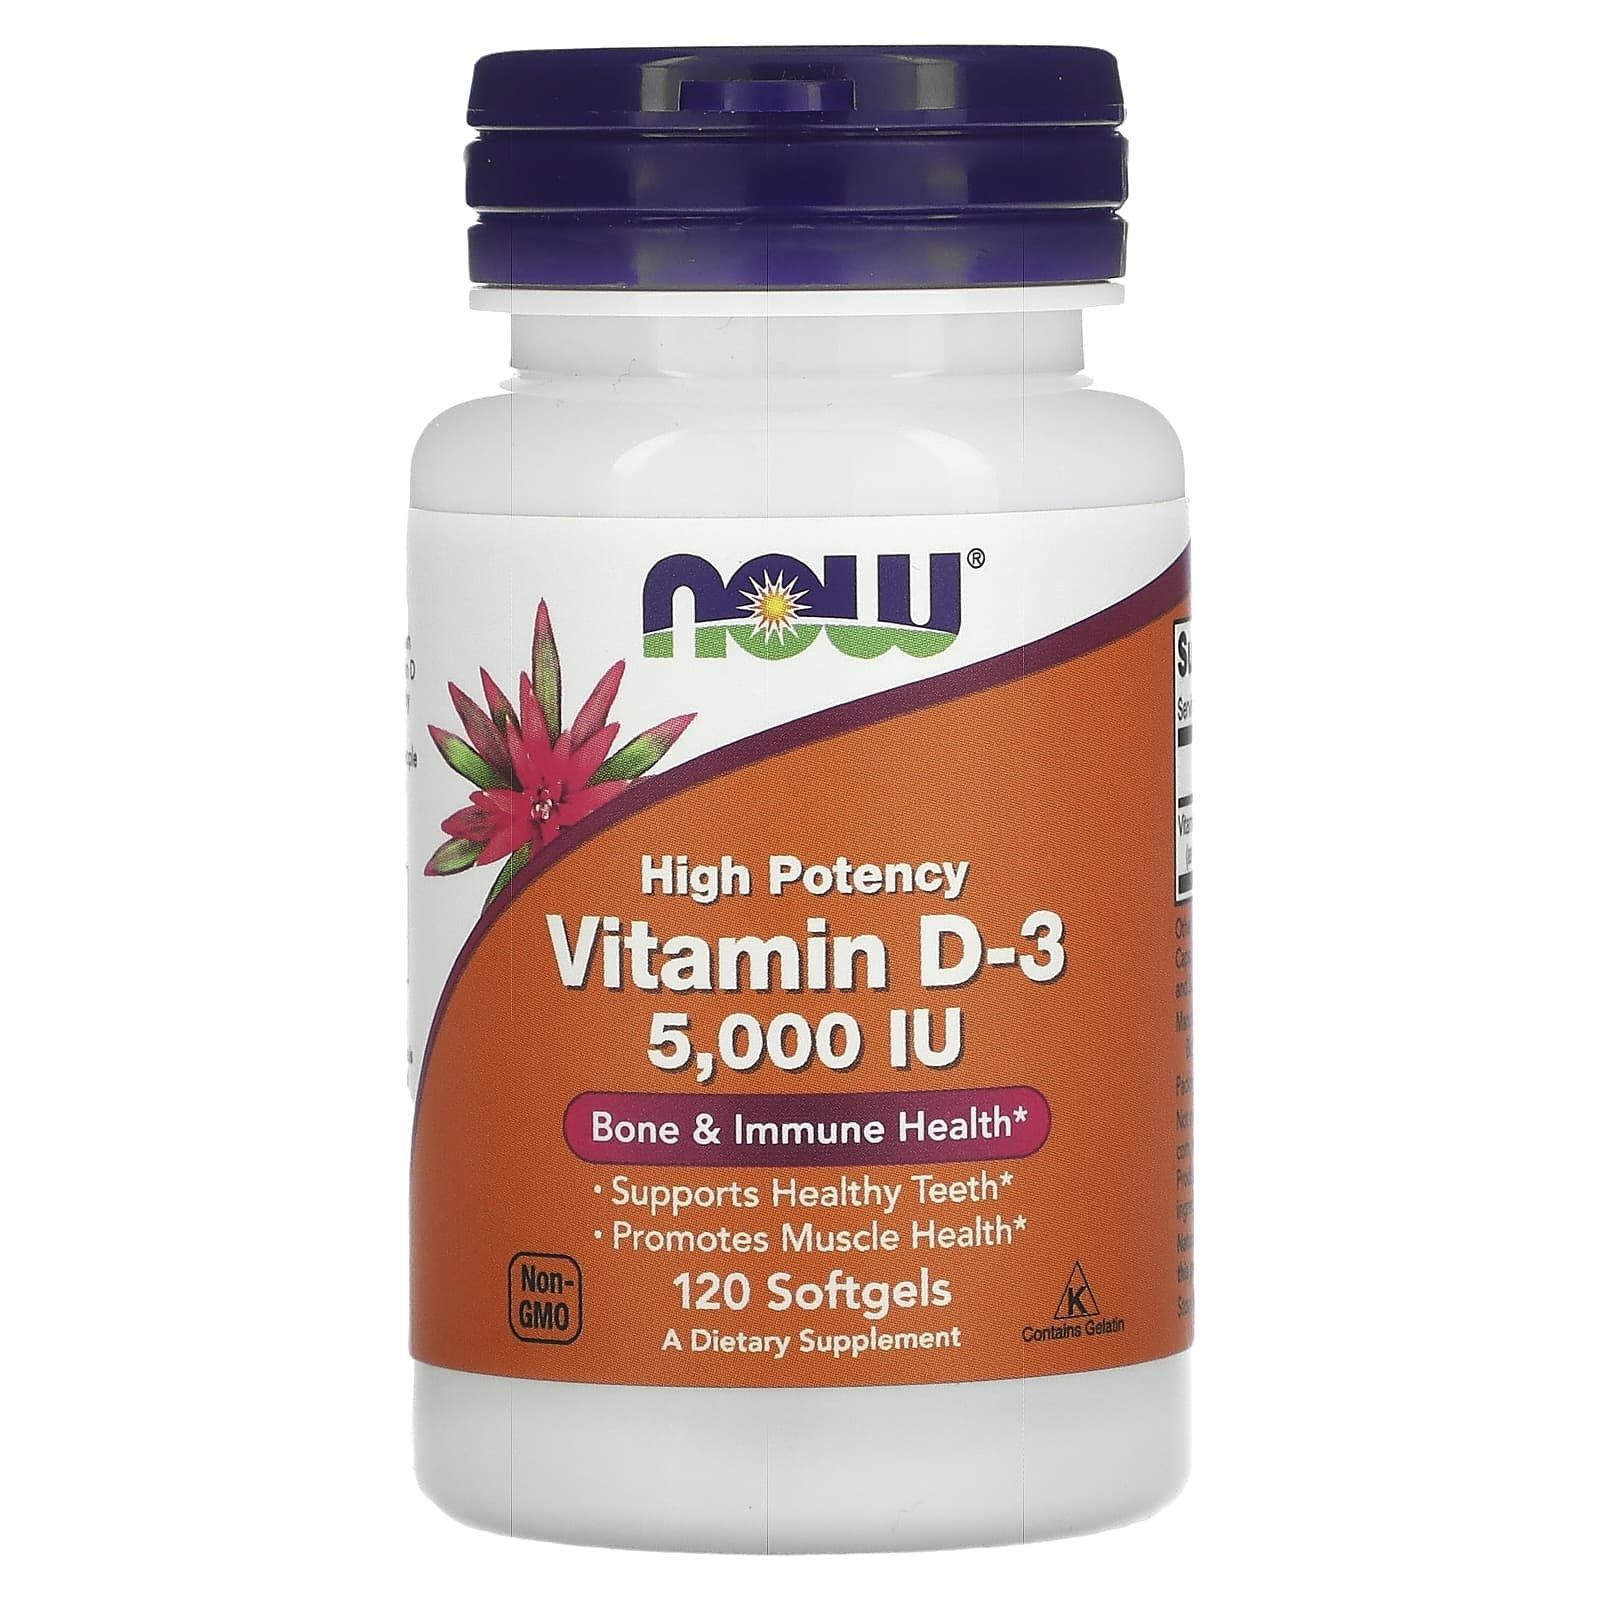 Vitamin d3 Now .